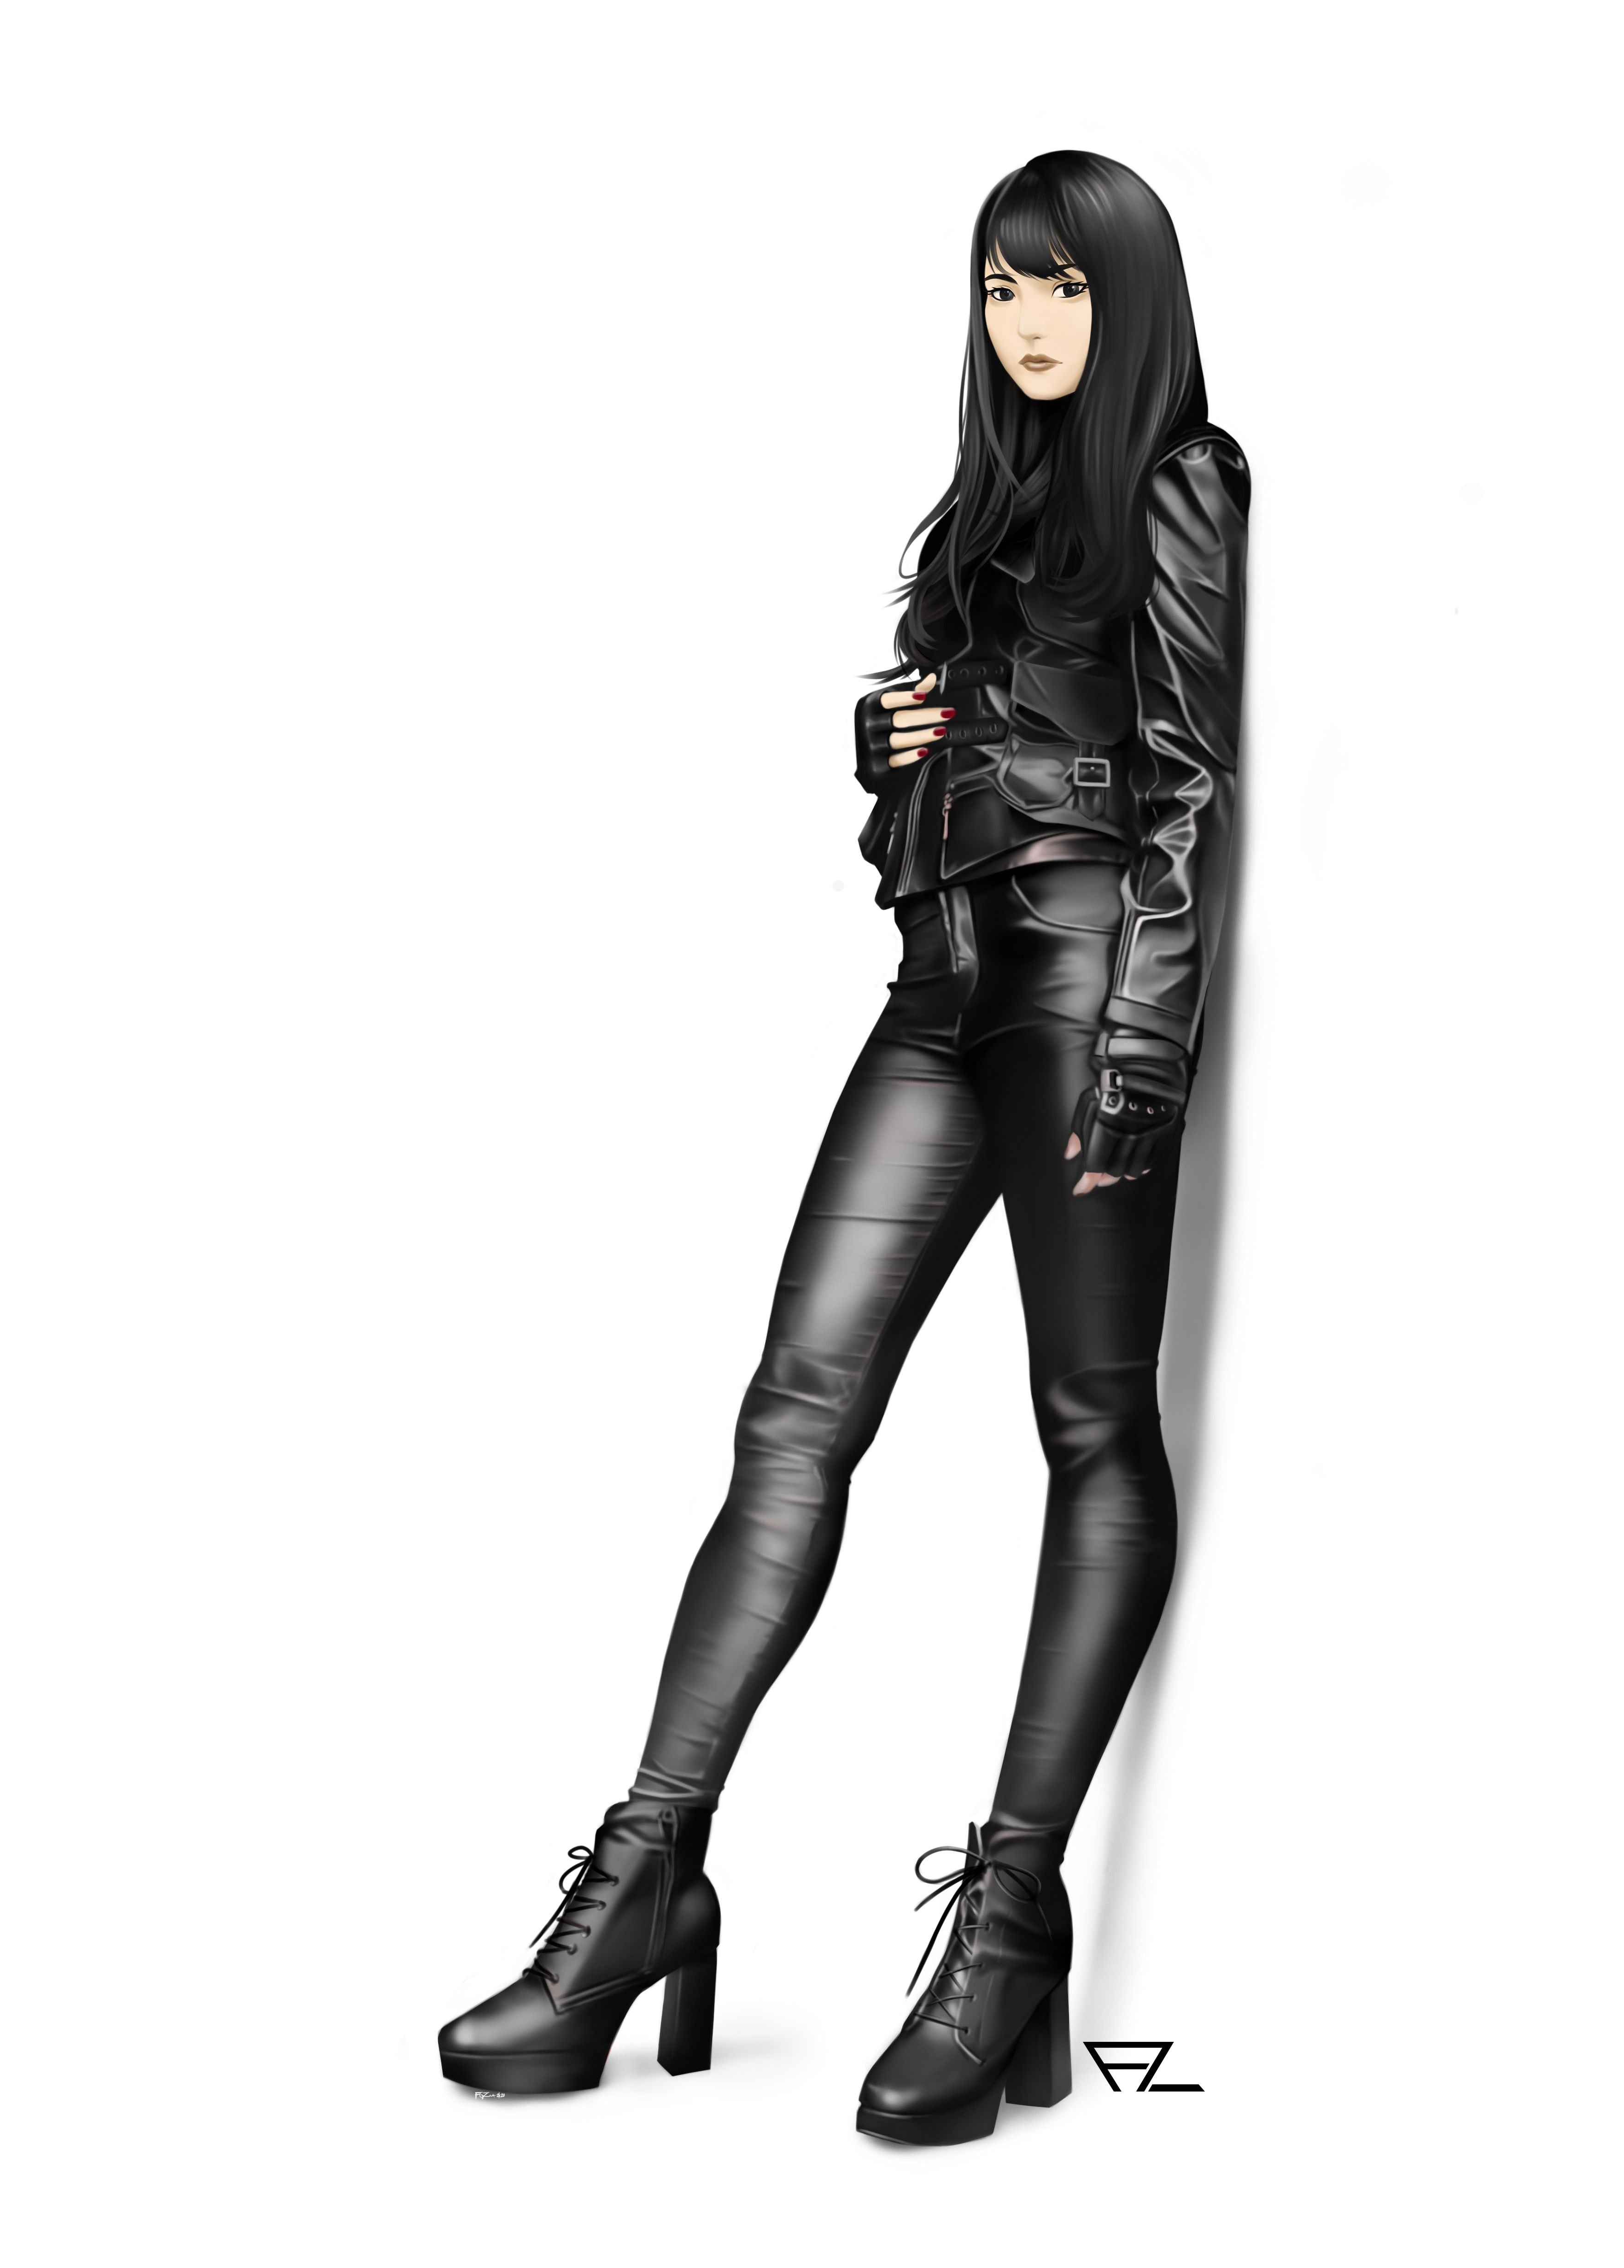 Girl in black outfit. Girls illustration, Cyberpunk style, Illustration girl